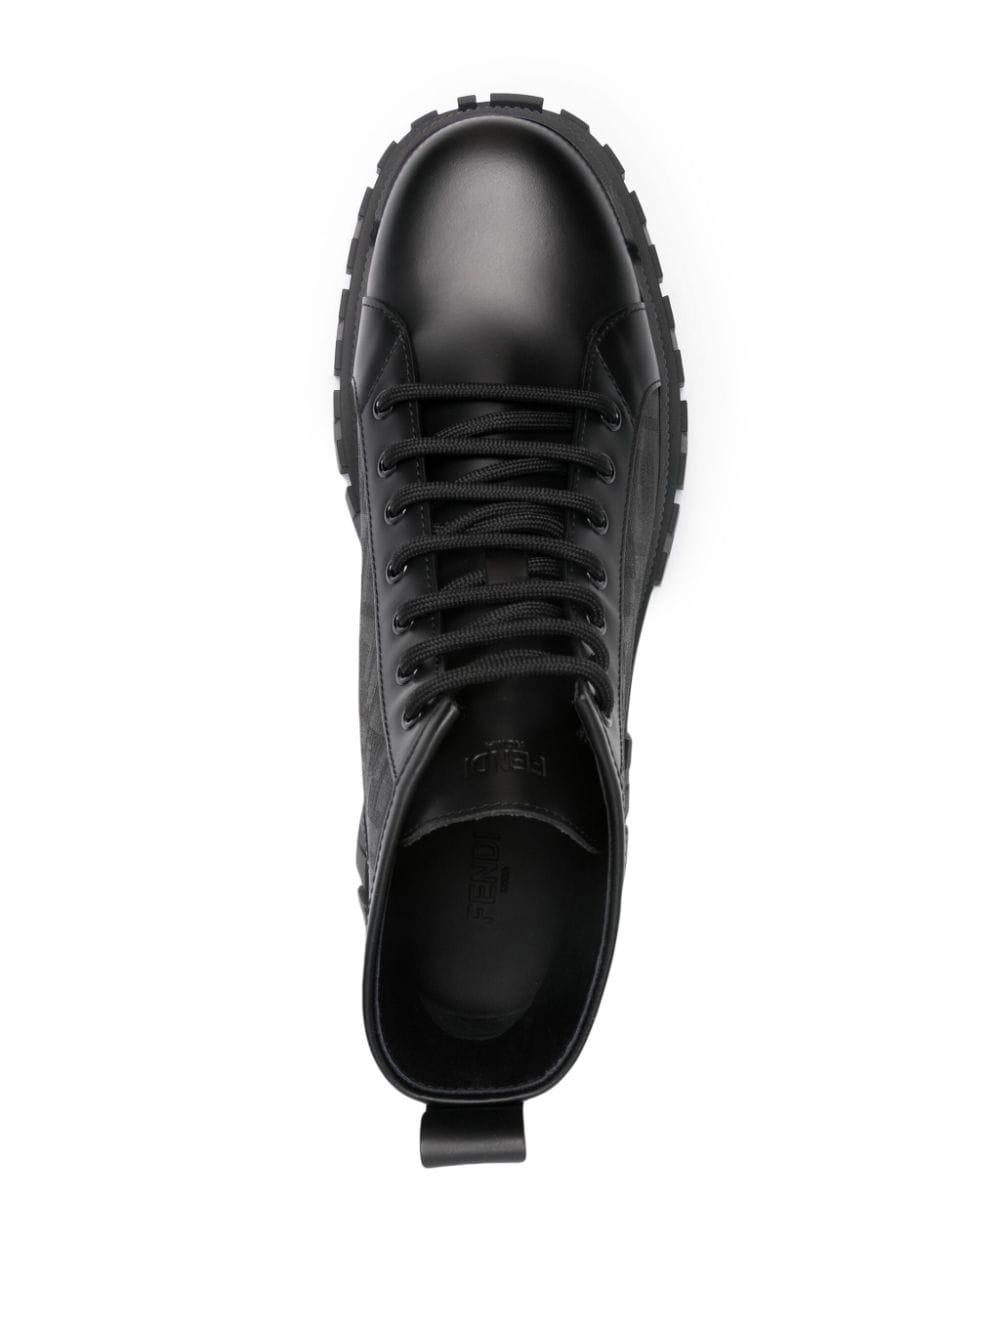 FENDI FF-jacquard leather boots Black